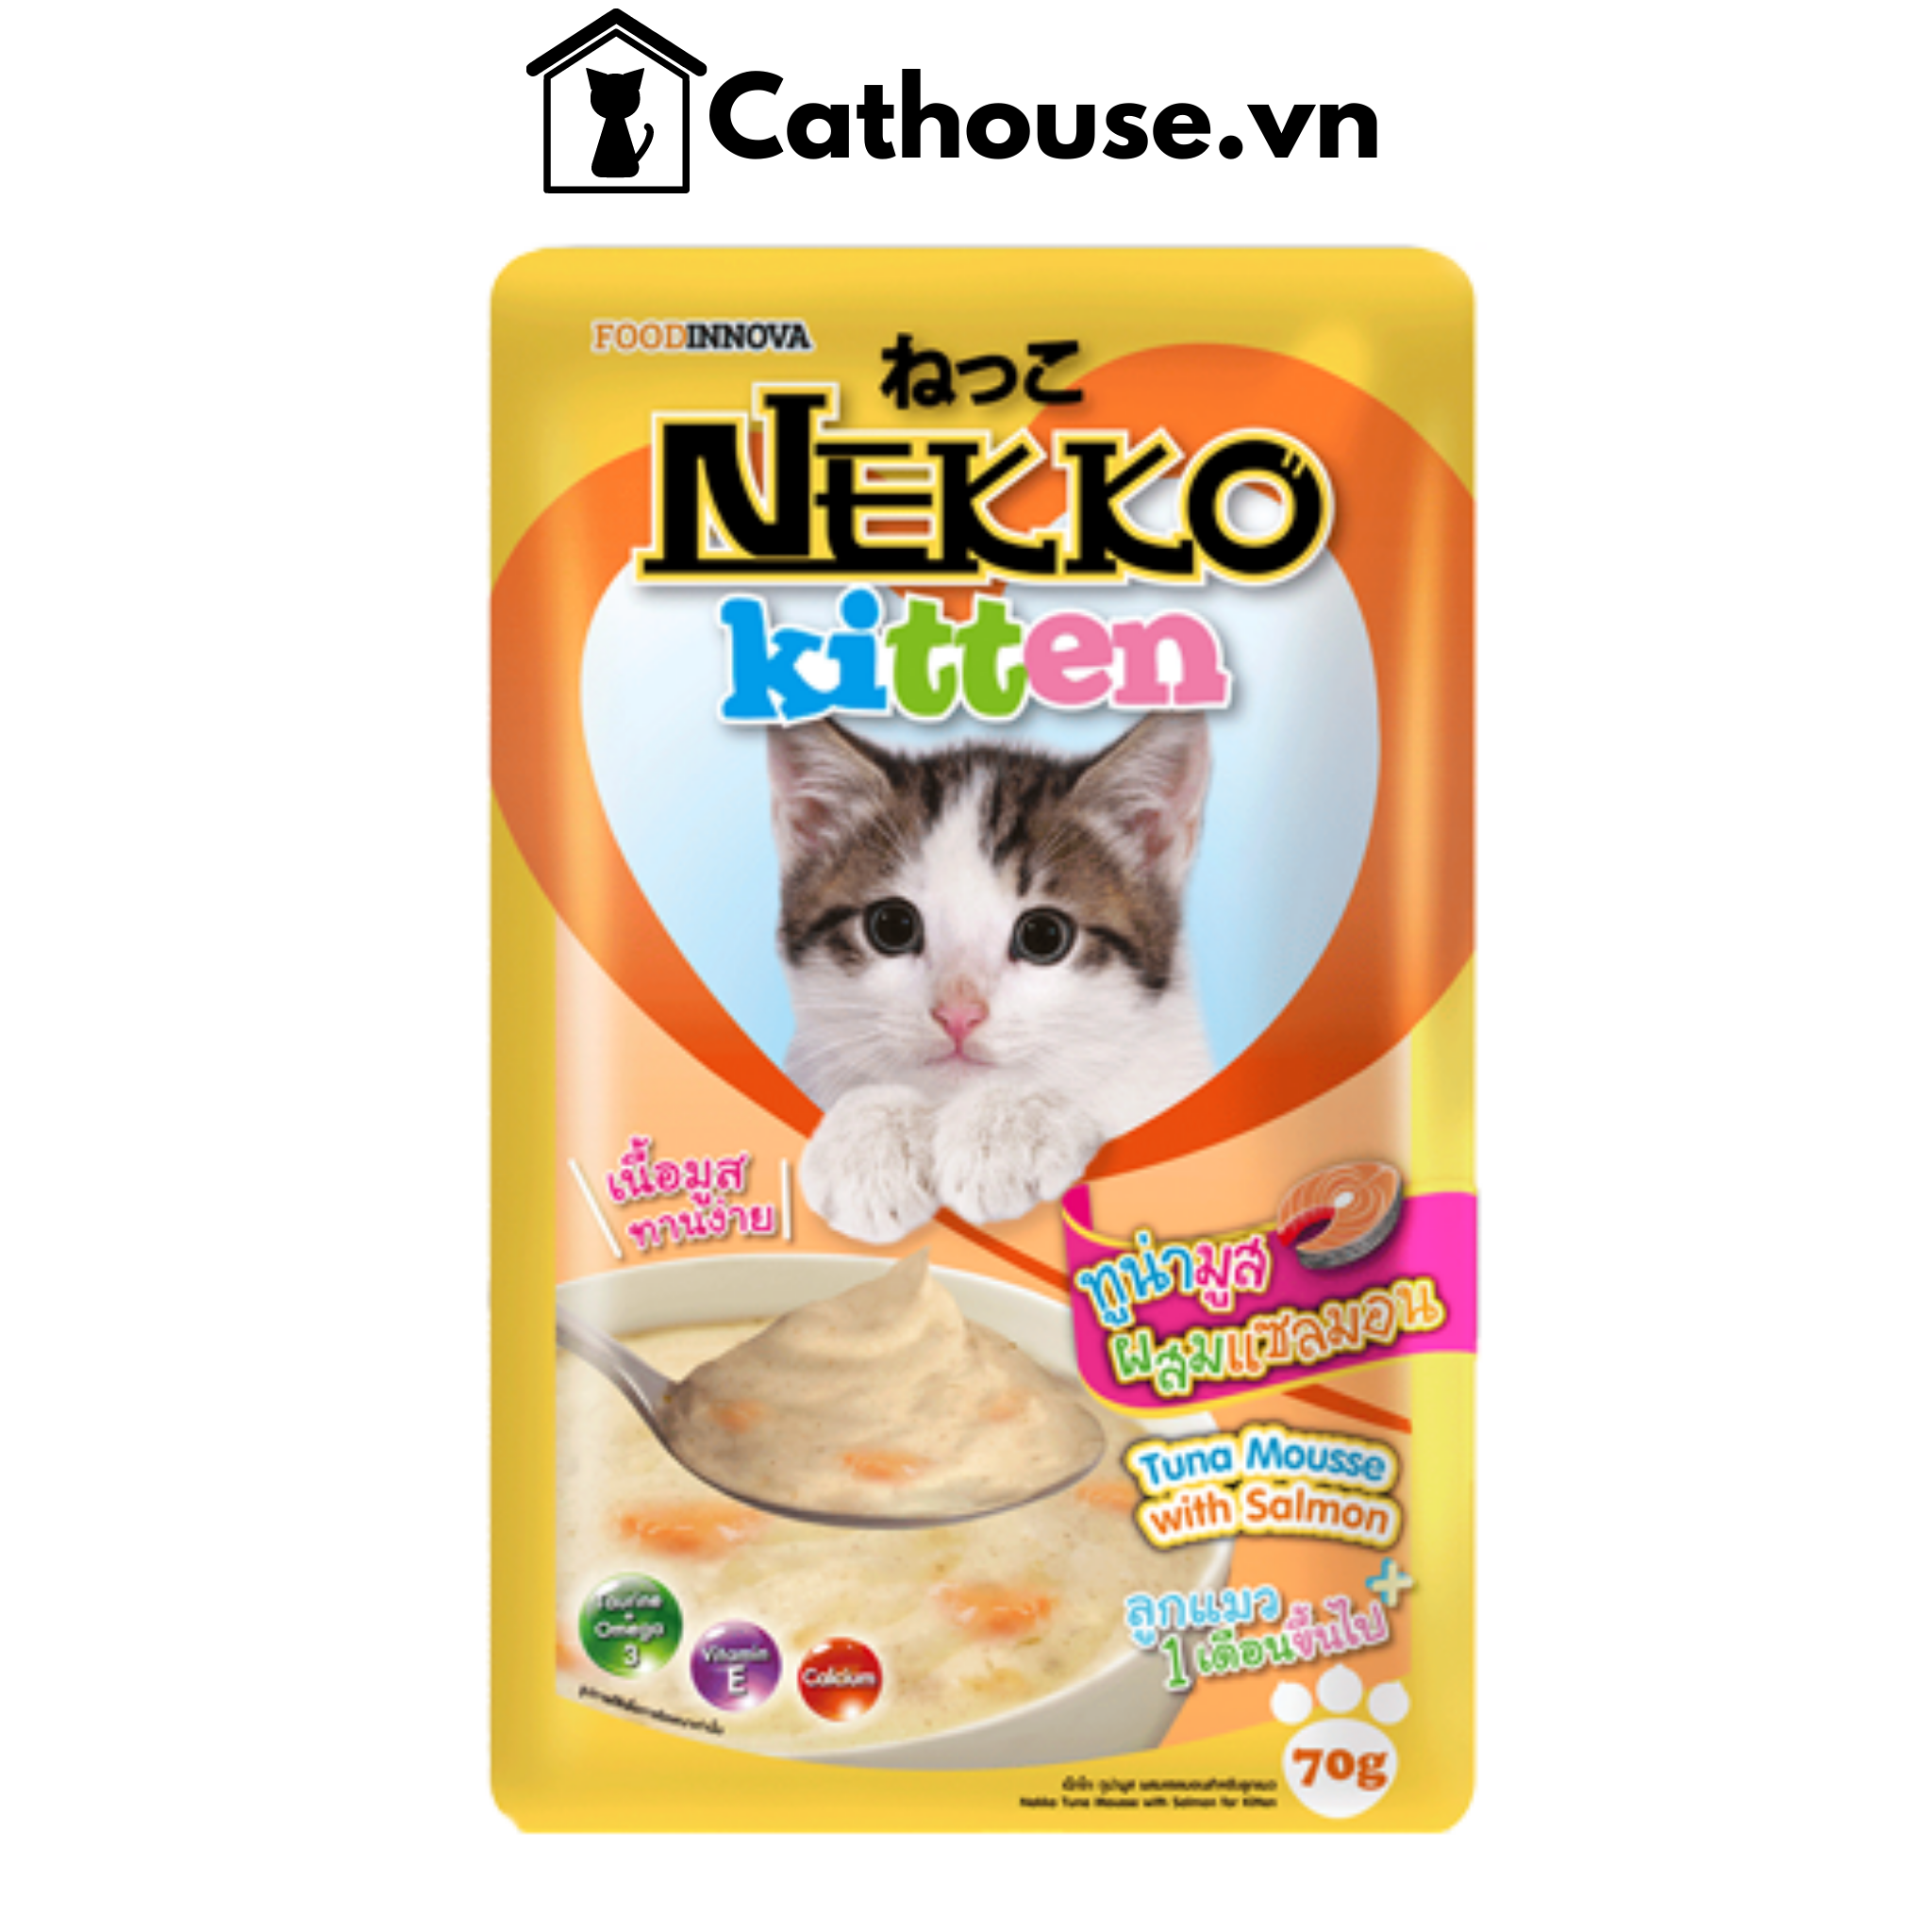  Pate Nekko Kitten 70G 